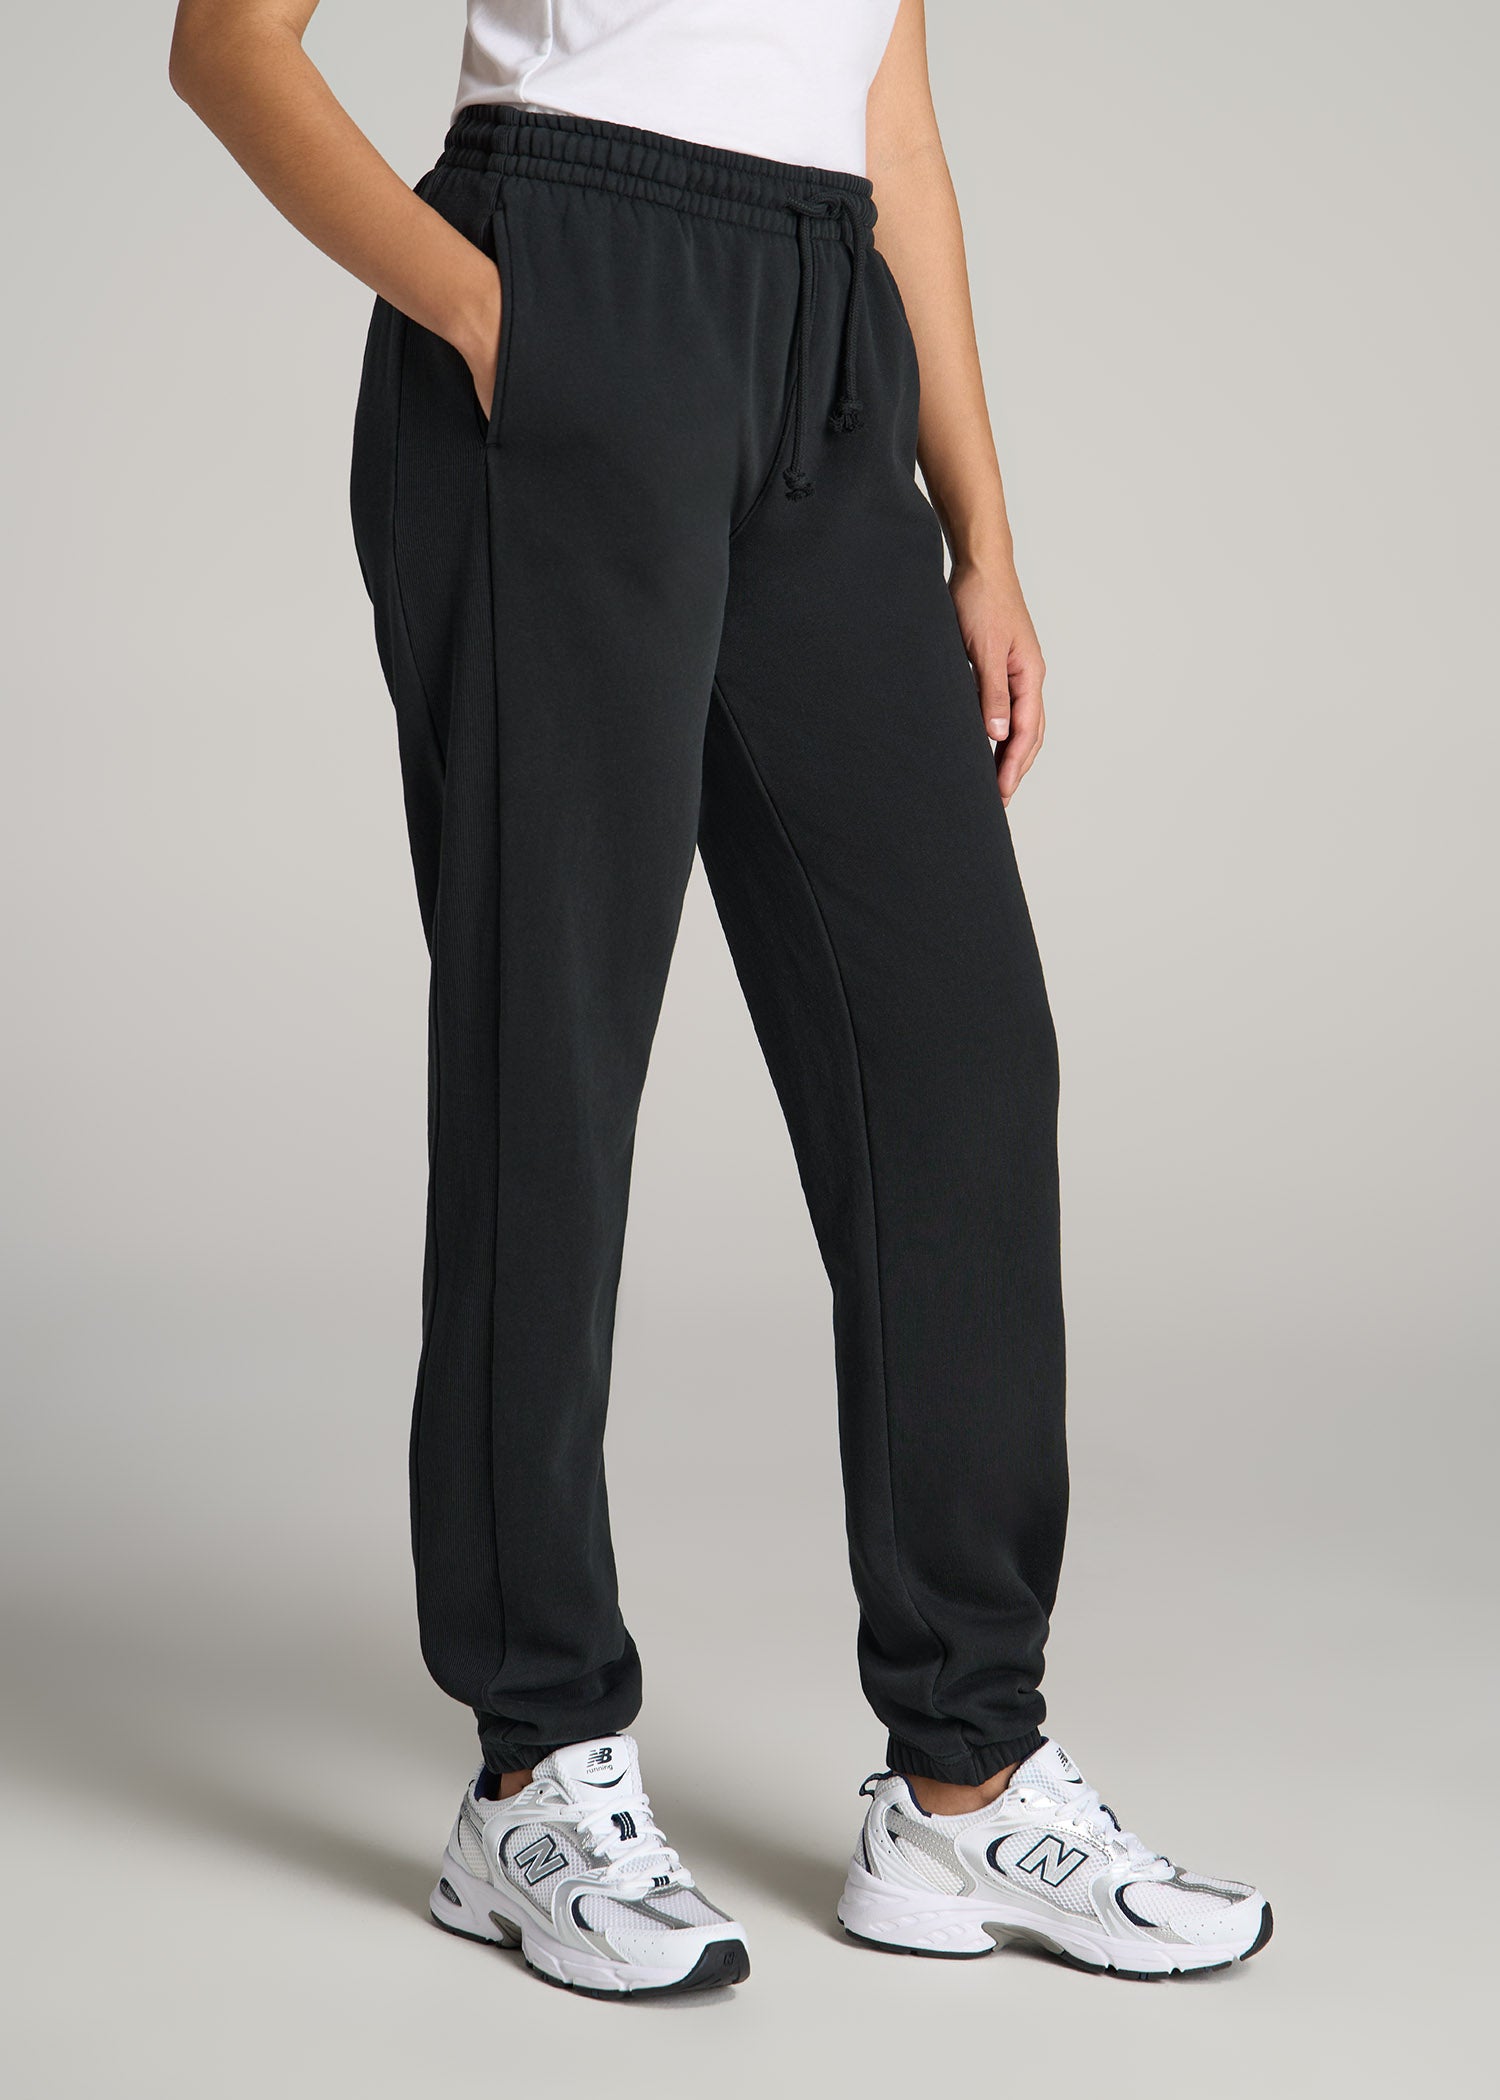 Sweatpants for Tall Girls: Woman's Garment Dyed Sweatpants Black